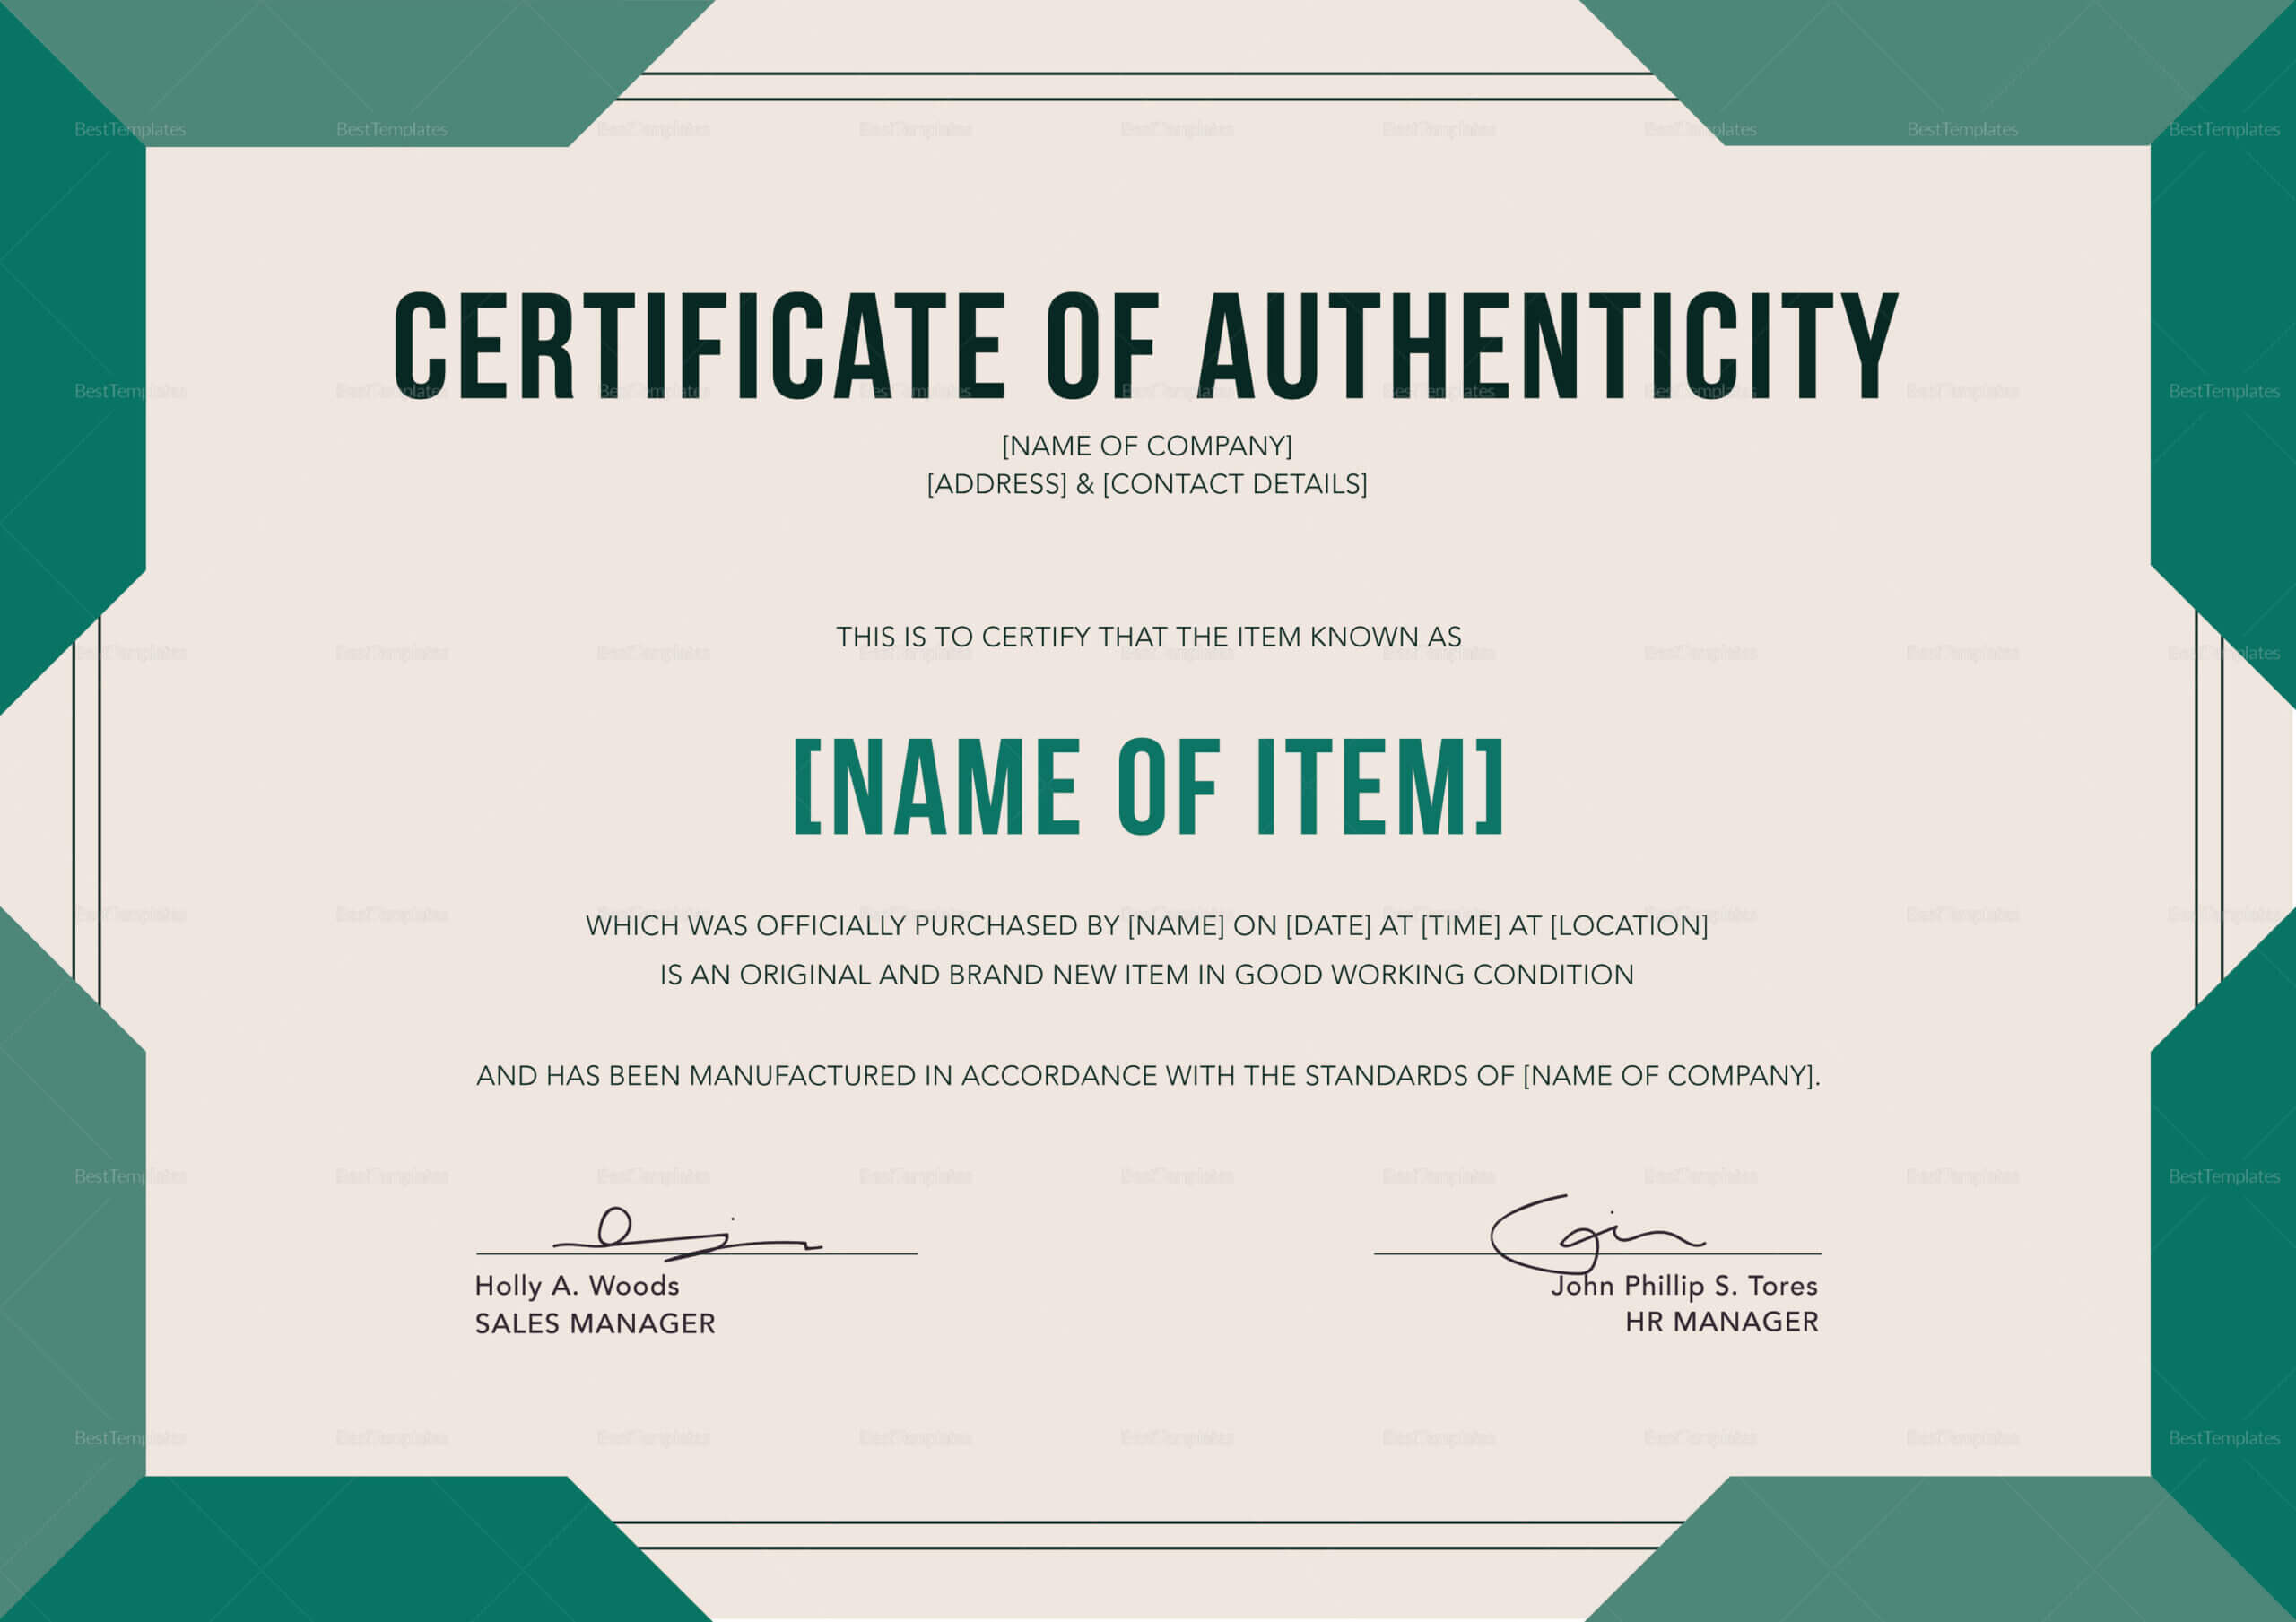 Elegant Certificate Of Authenticity Template Intended For Certificate Of Authenticity Template